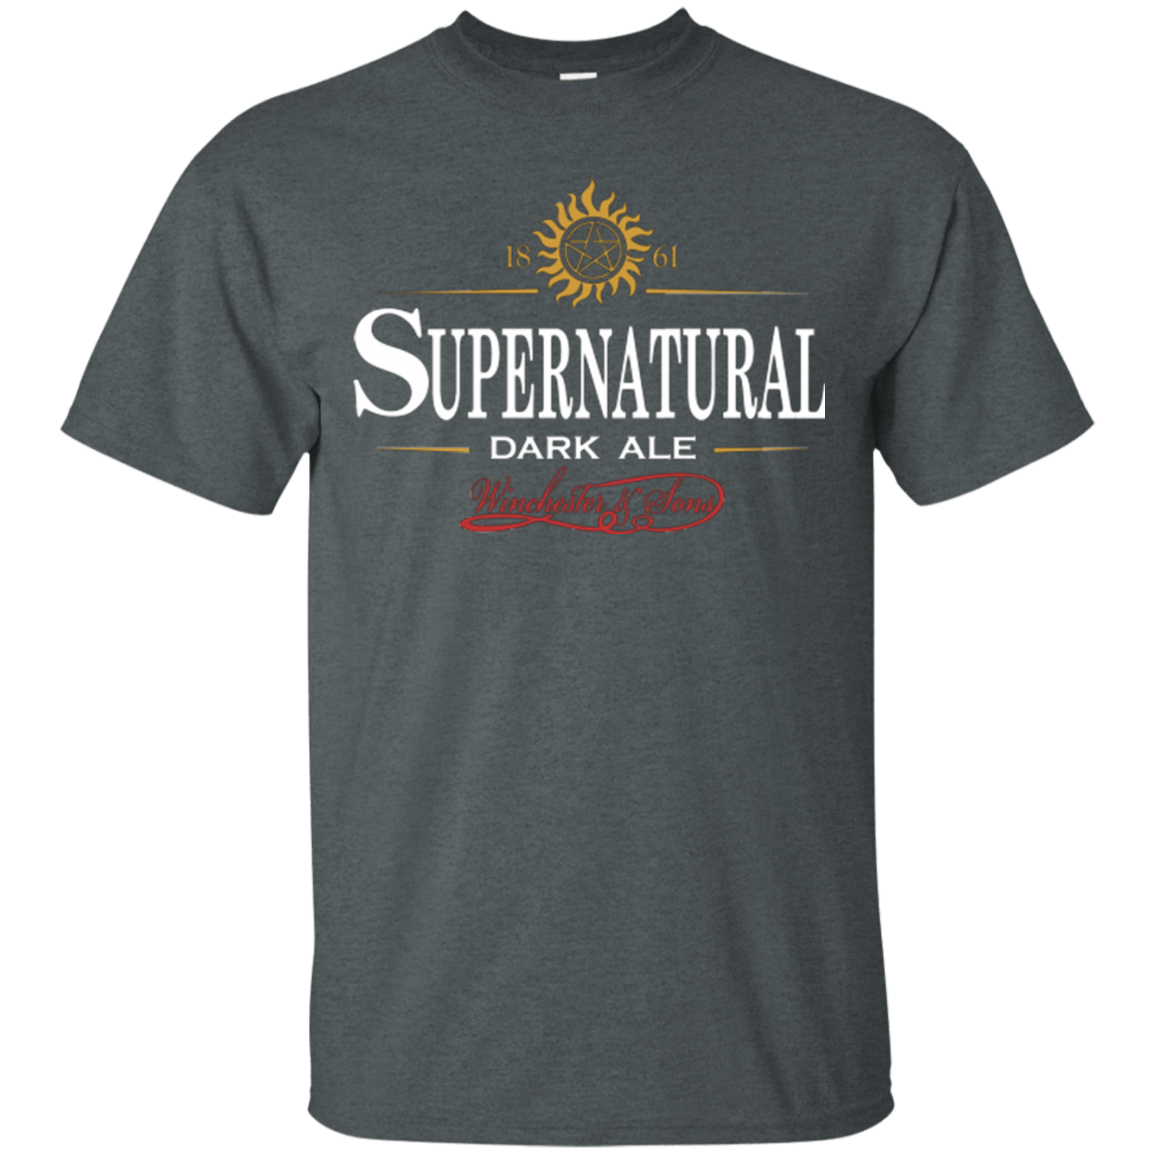 T-Shirts Dark Heather / Small Supernatural Stout T-Shirt